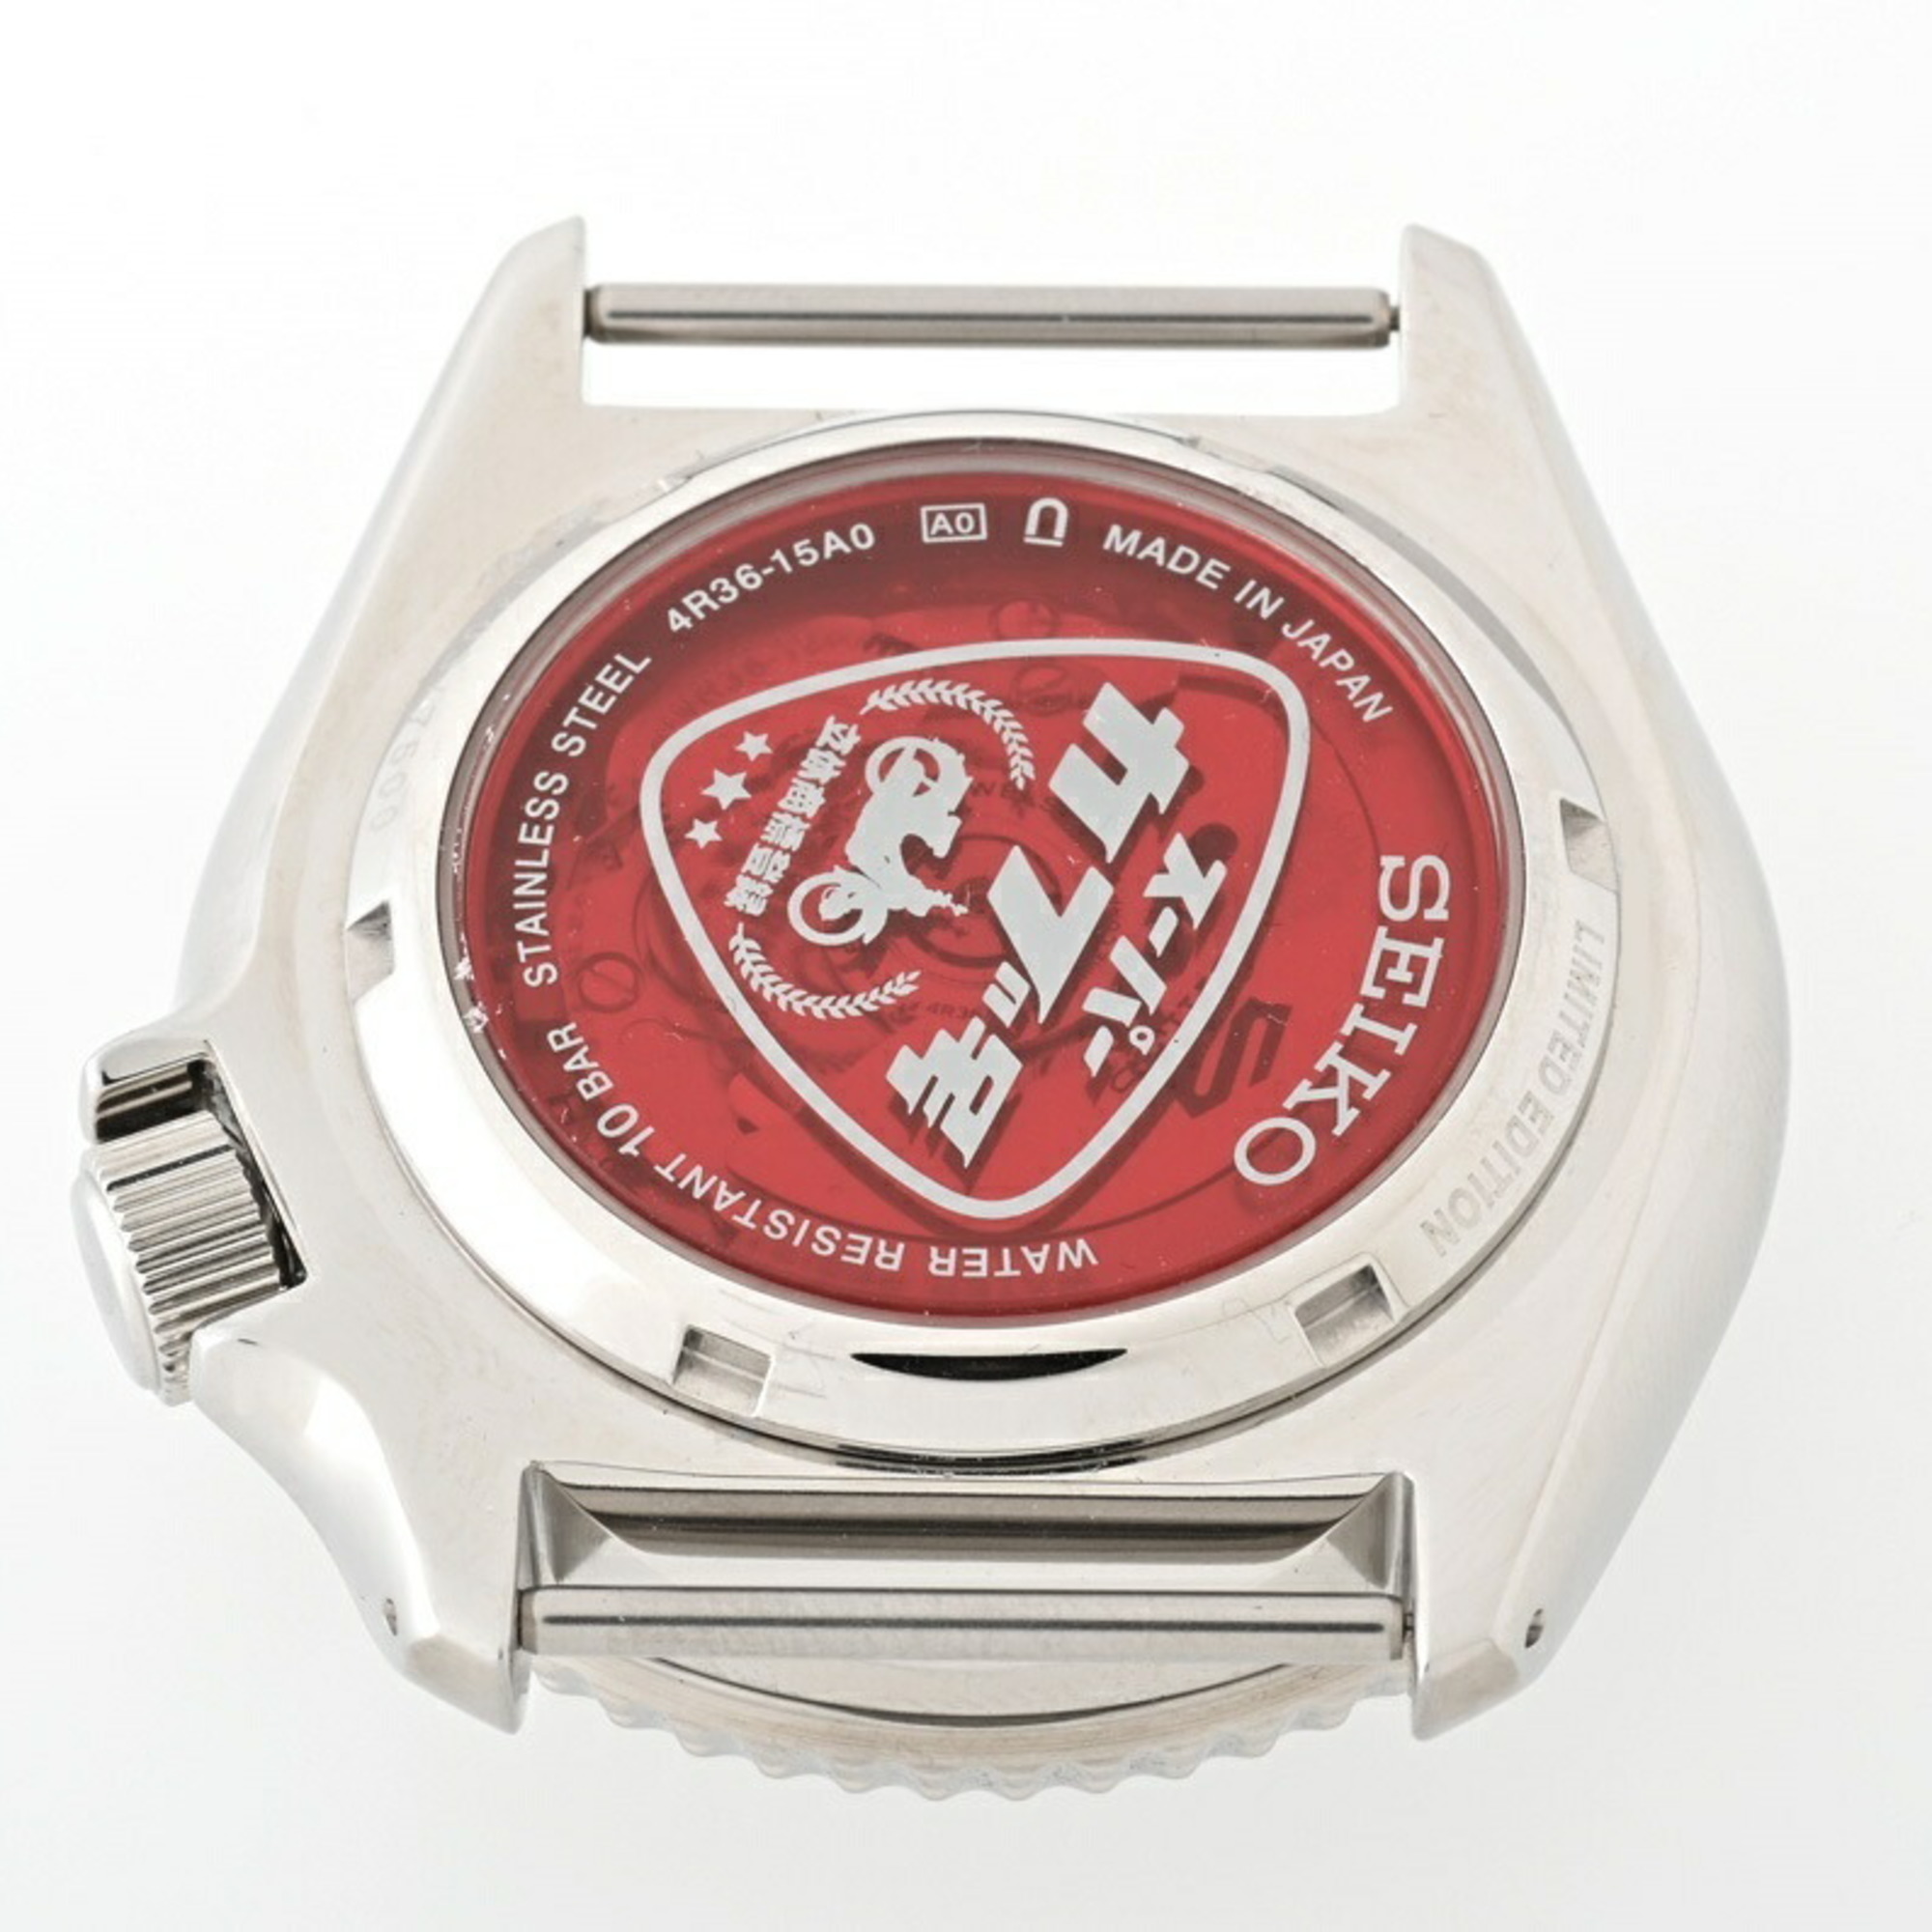 Seiko SEIKO 5 Sports Super Cub Collaboration Limited 7500 Model SBSA237 4R36-15A0 Automatic Watch A-155623